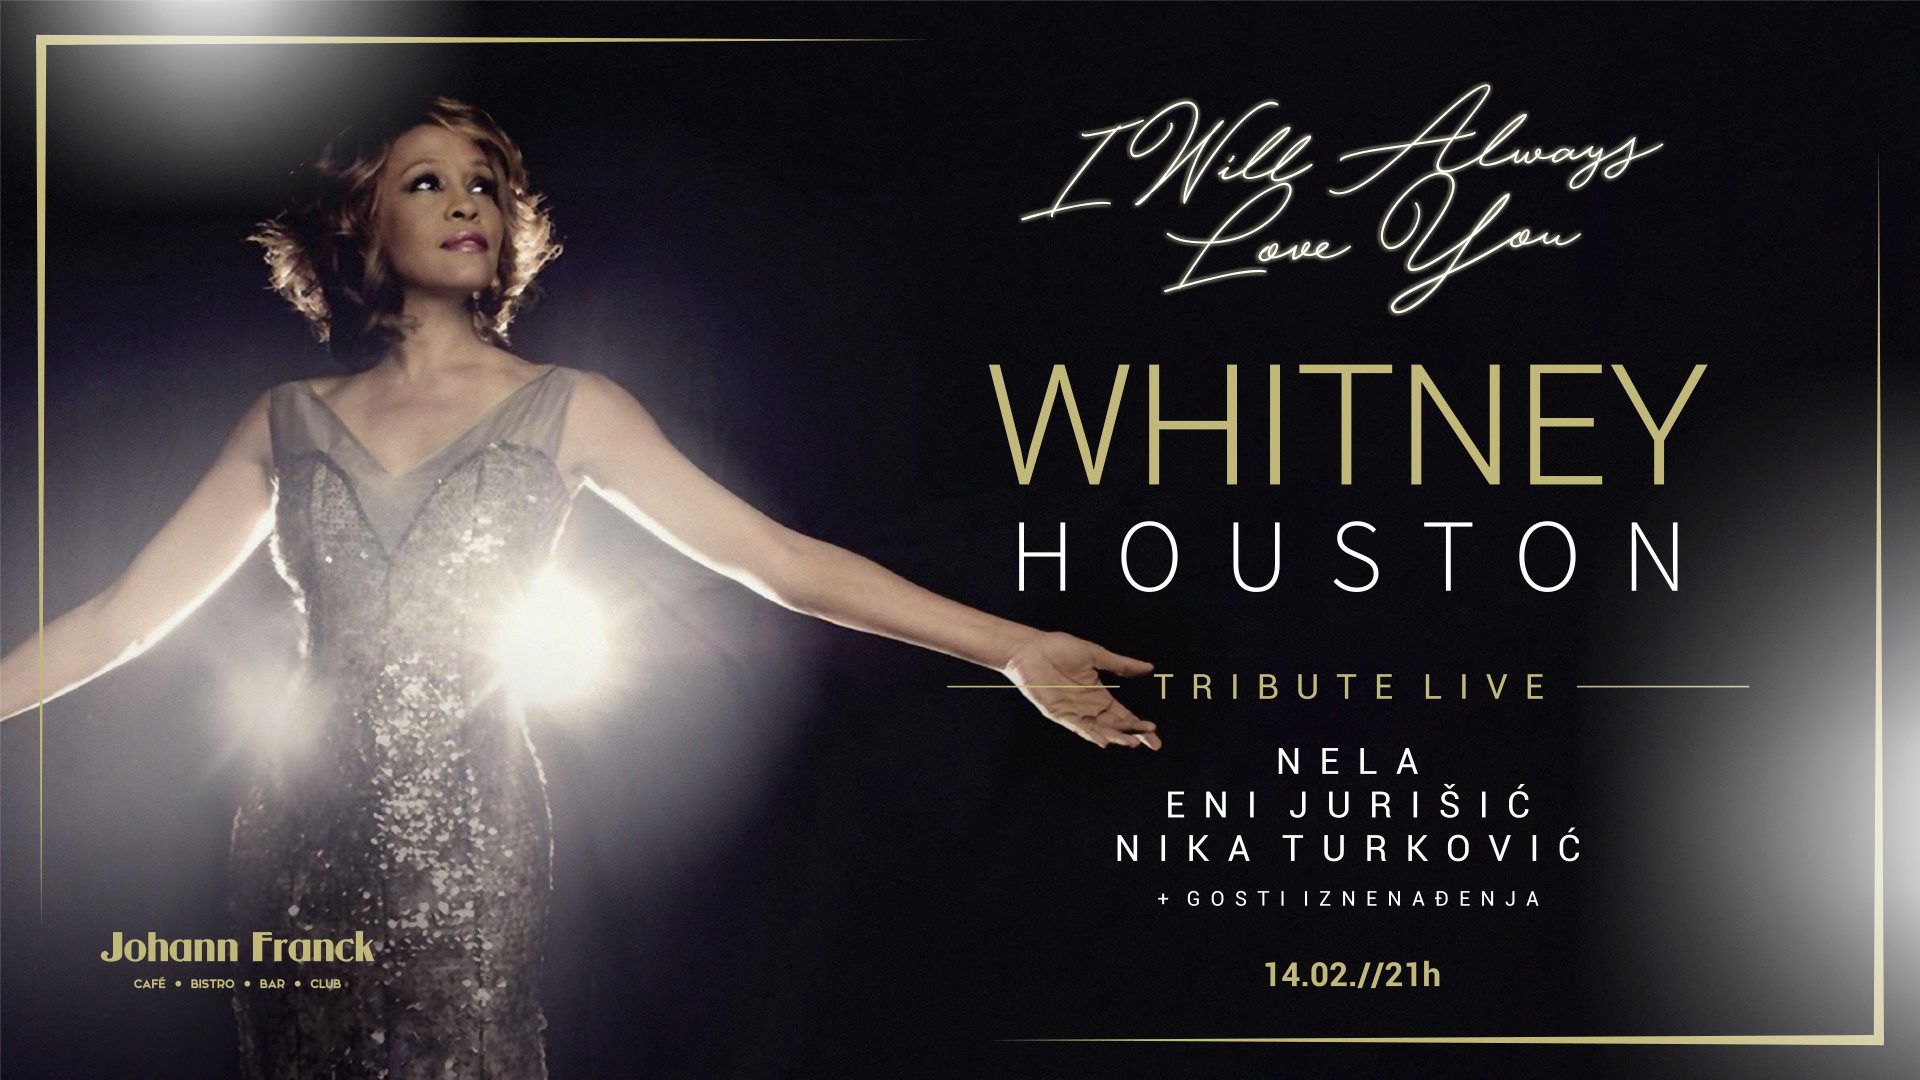 I will always love you: Tribute to Whitney Houston LIVE 14.02.2018. Johann Franck